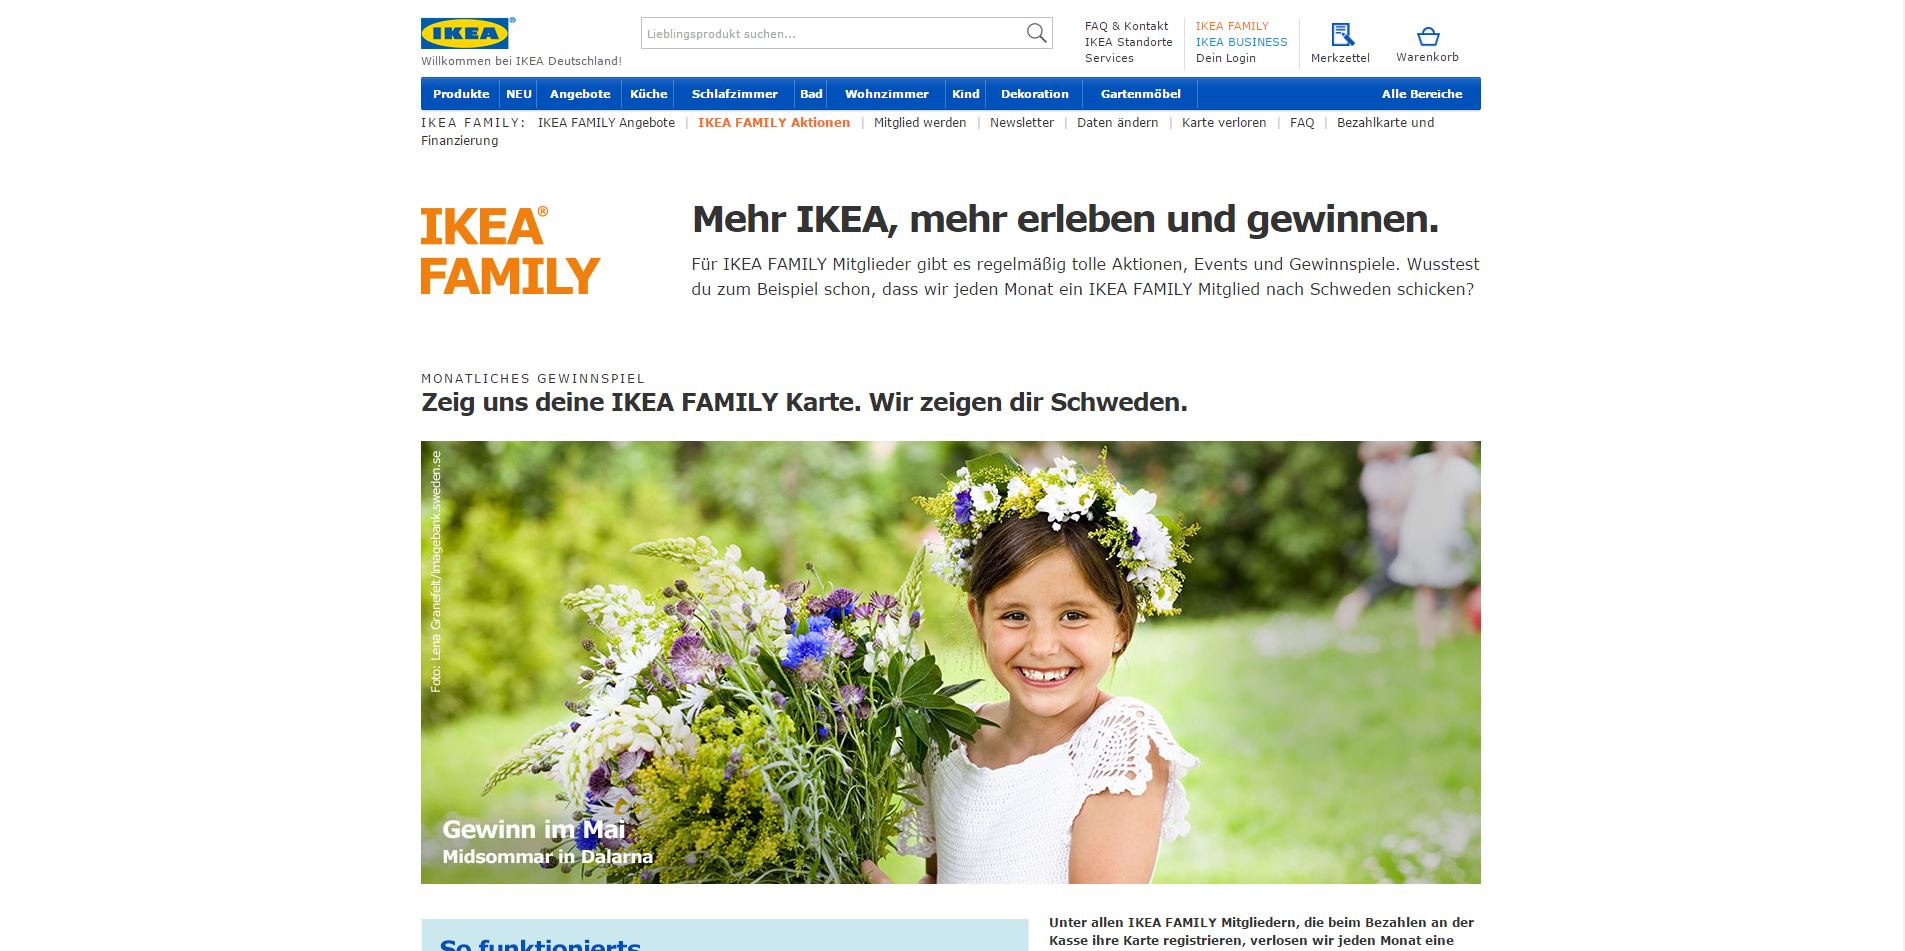 ikea-family-karte-taeglich-gewinnen-monatlich-gewinnen-schweden-reise-250-euro